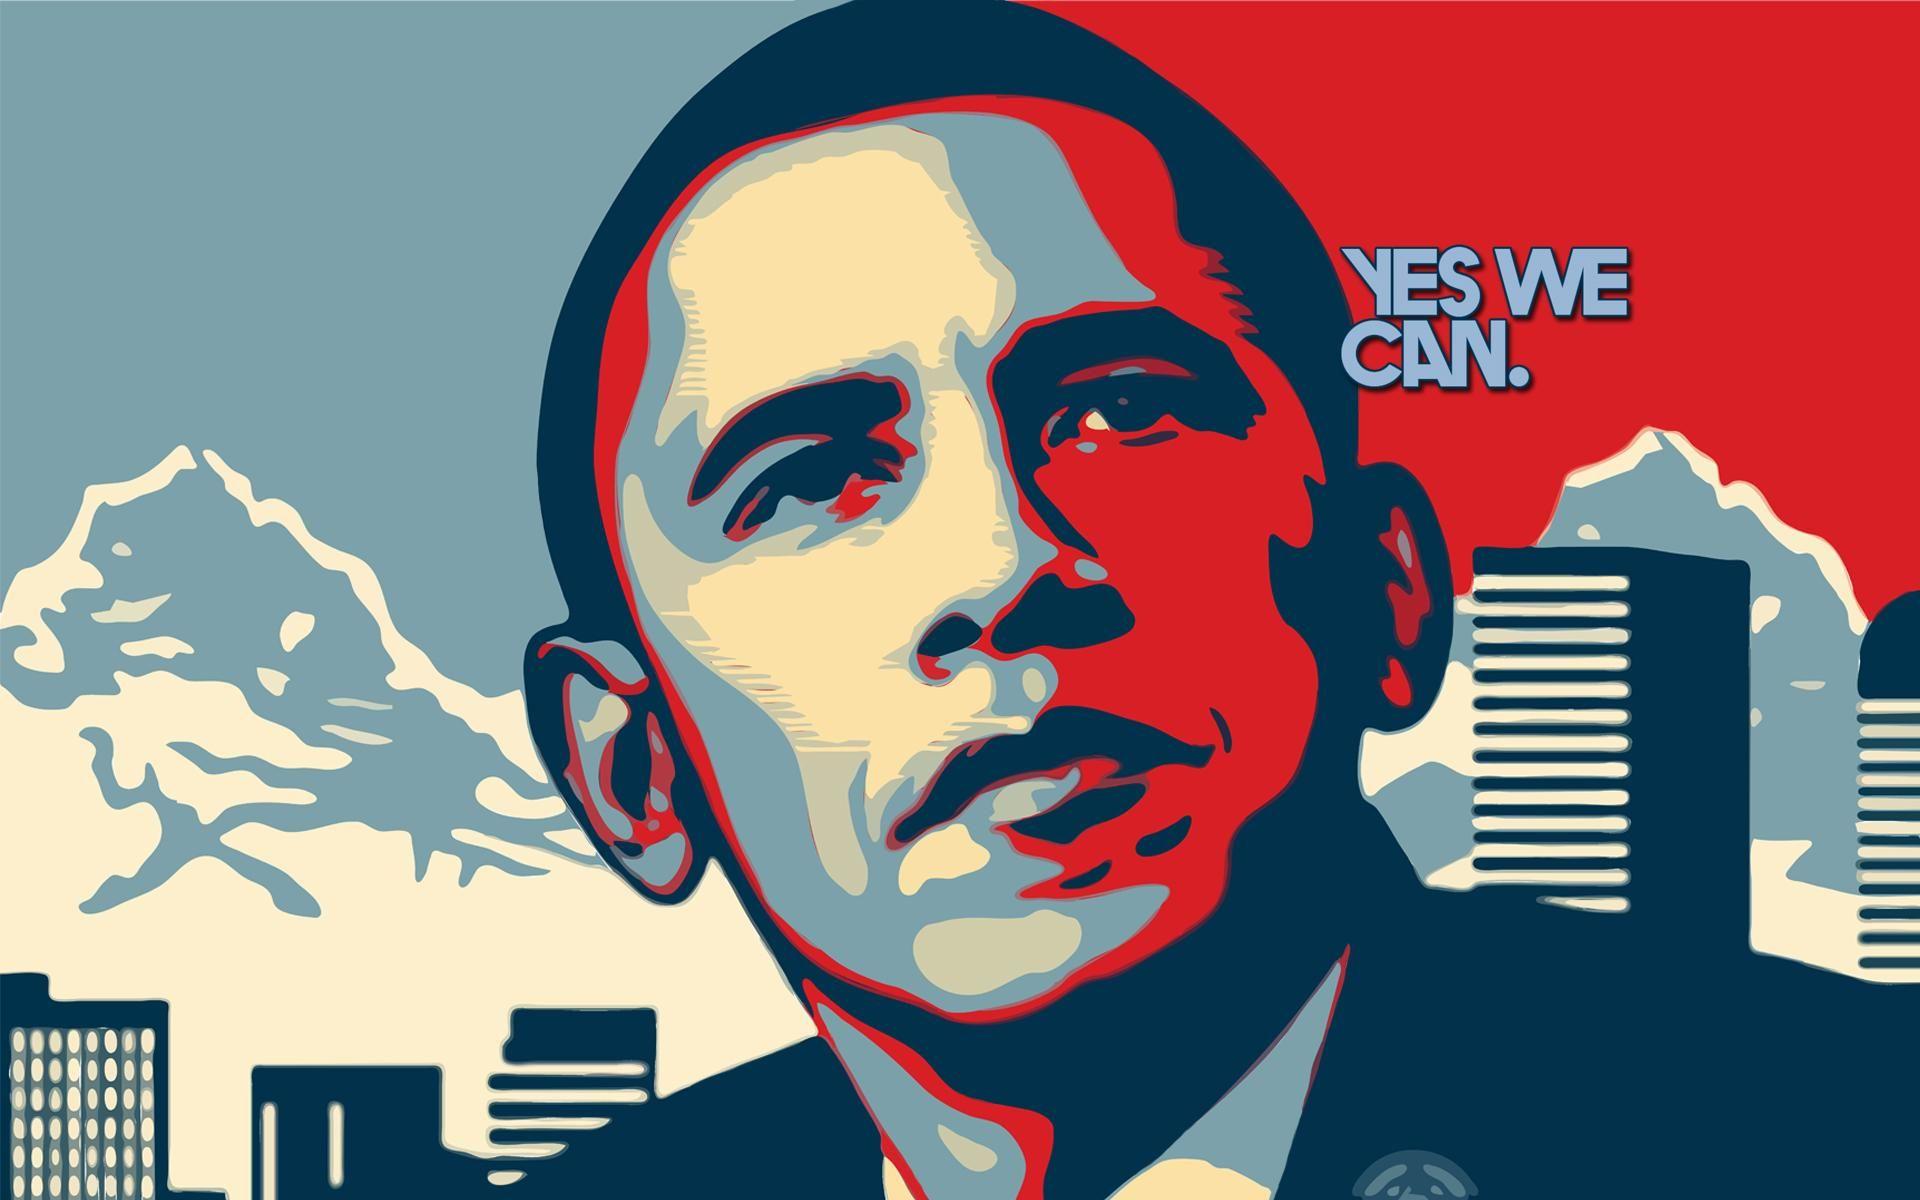 Obama Wallpaper. (34++ Wallpaper)